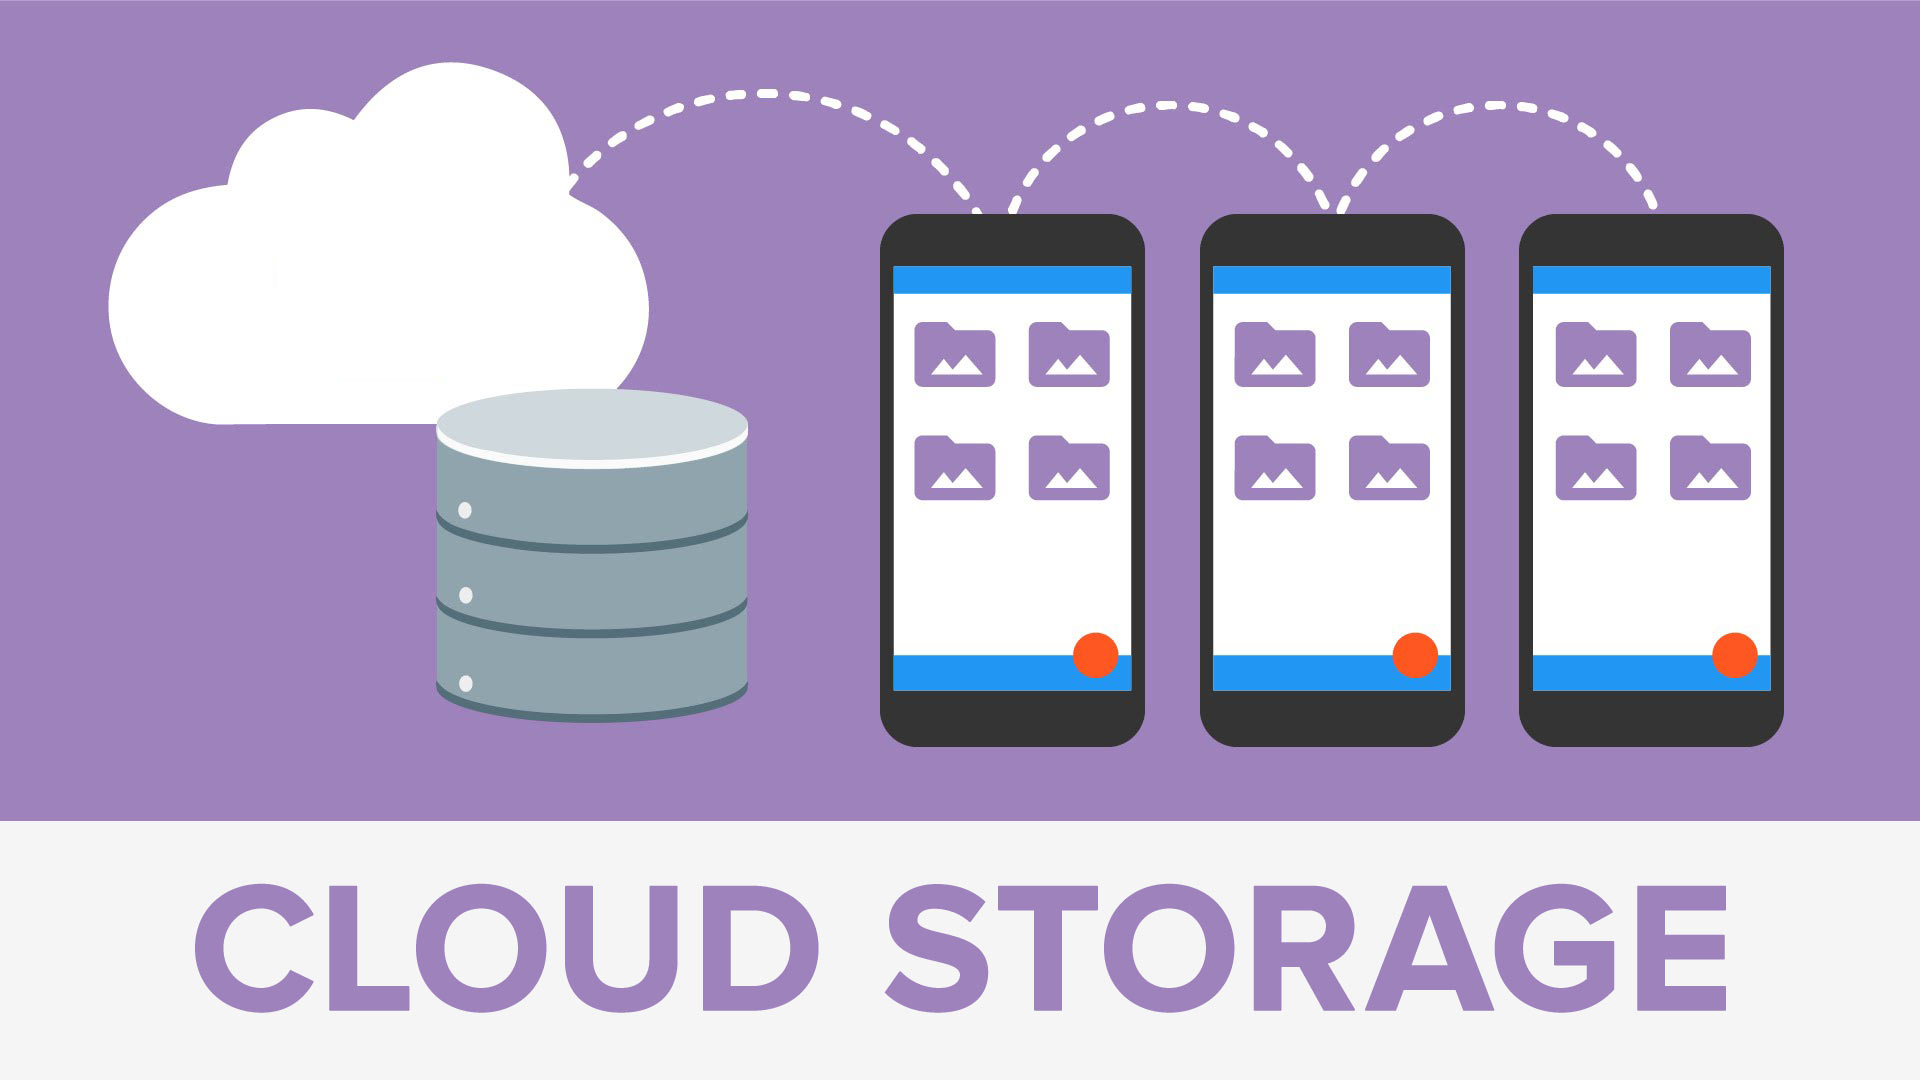 Advantages and disadvantages of cloud storage